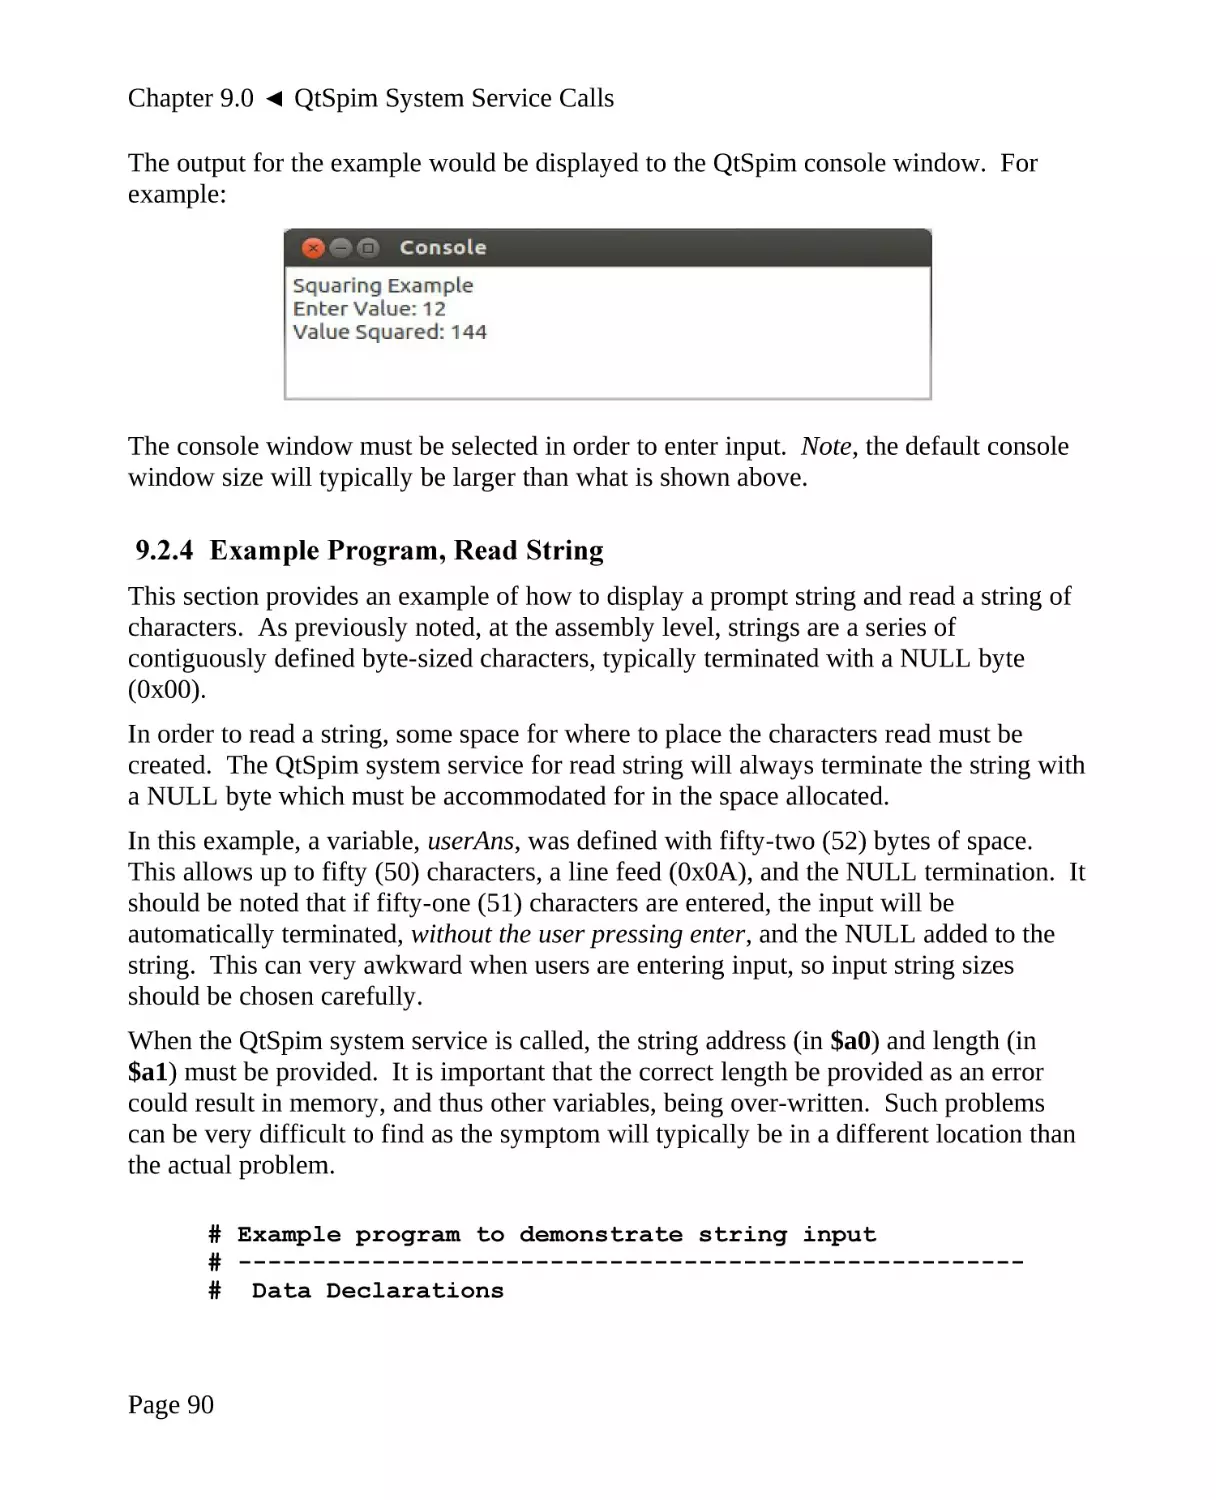 9.2.4 Example Program, Read String